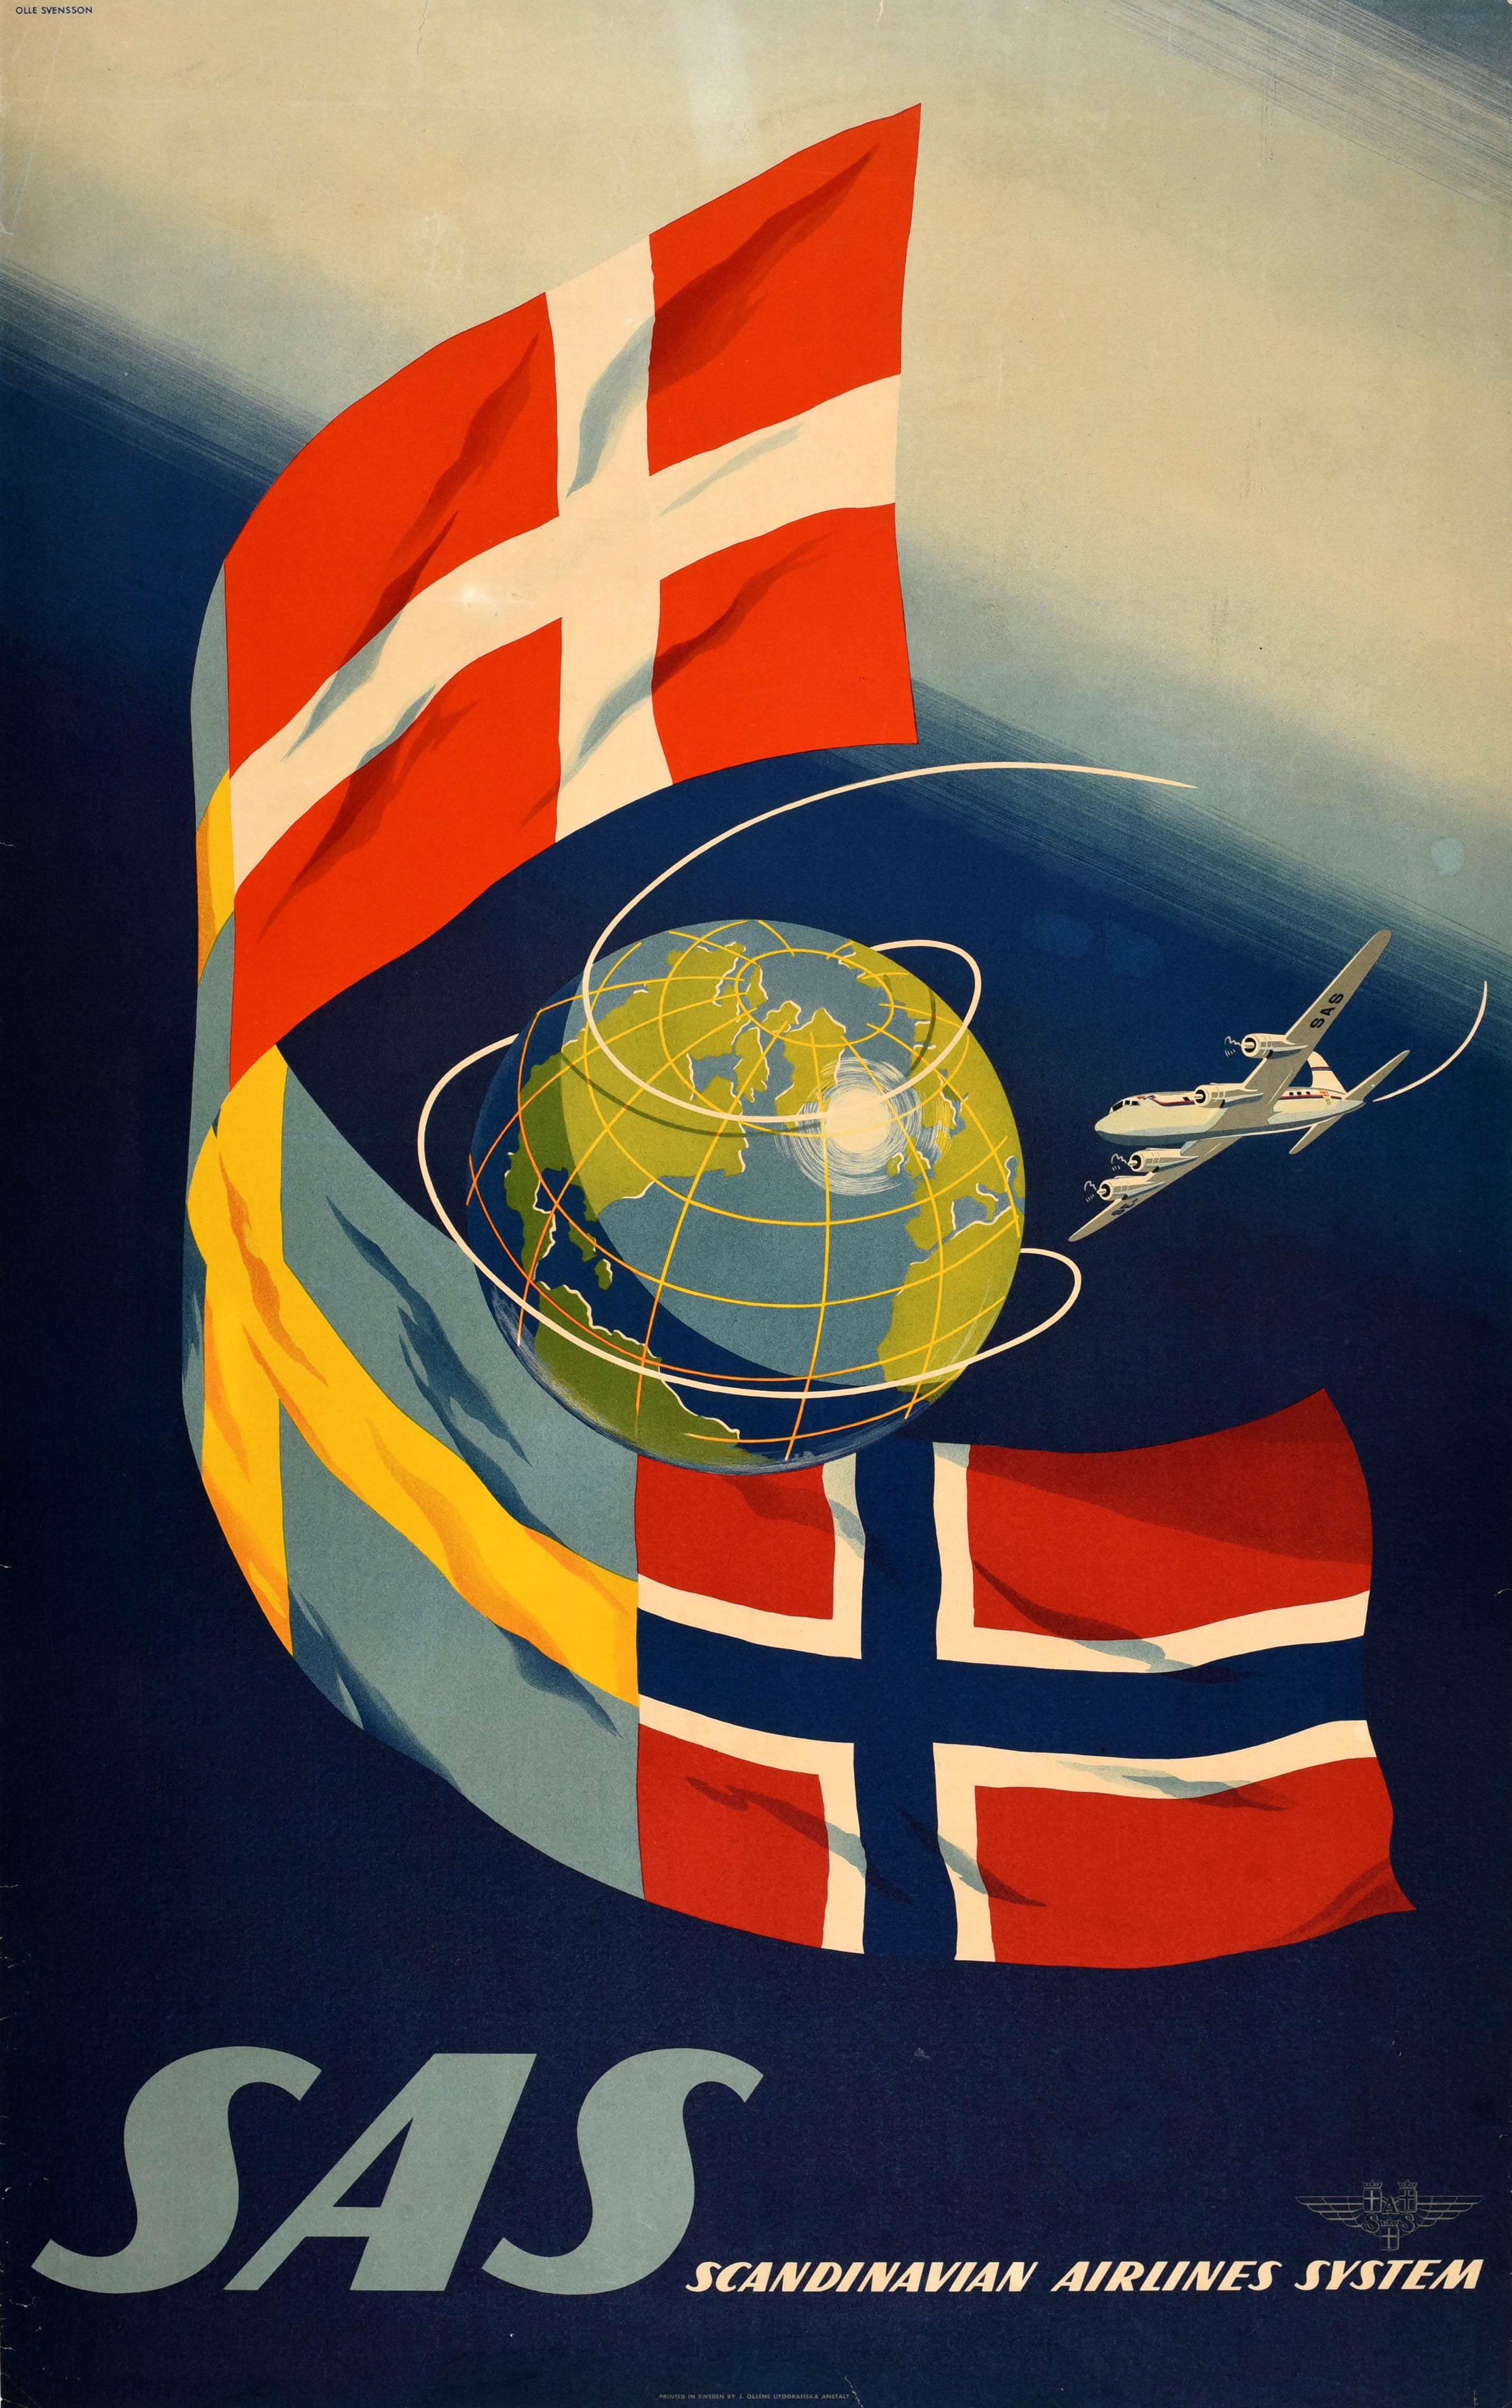 Unknown Print - Original Vintage Travel Poster SAS Scandinavian Airlines System Olle Svensson